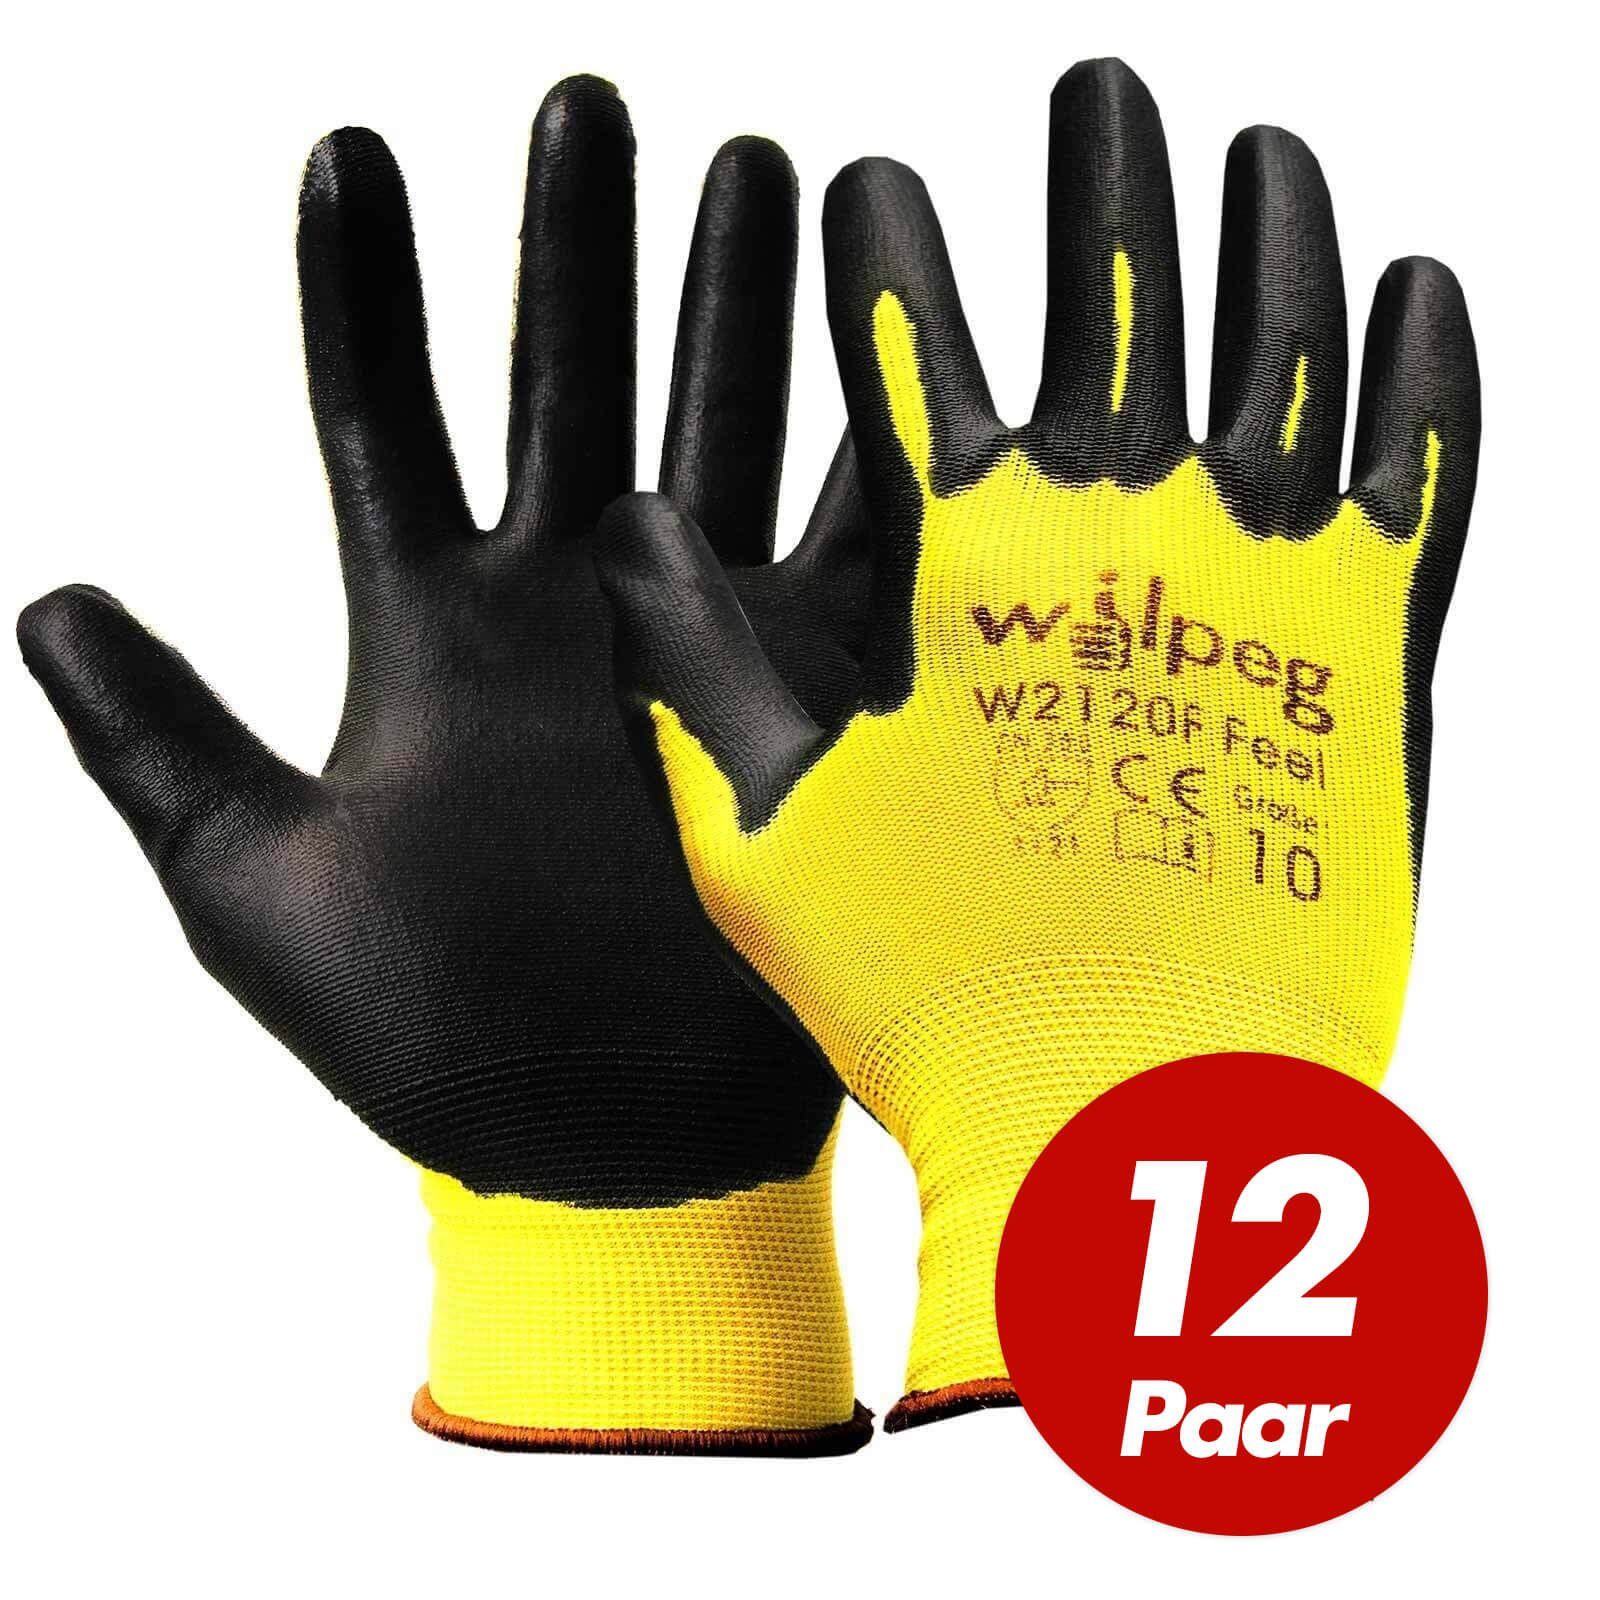 VPE WILPEG 12 Handschuhe Nitril-Handschuhe - Feel weiß PU Paar (Spar-Set) W2120F wilpeg® Nylon-Strickhandschuhe,